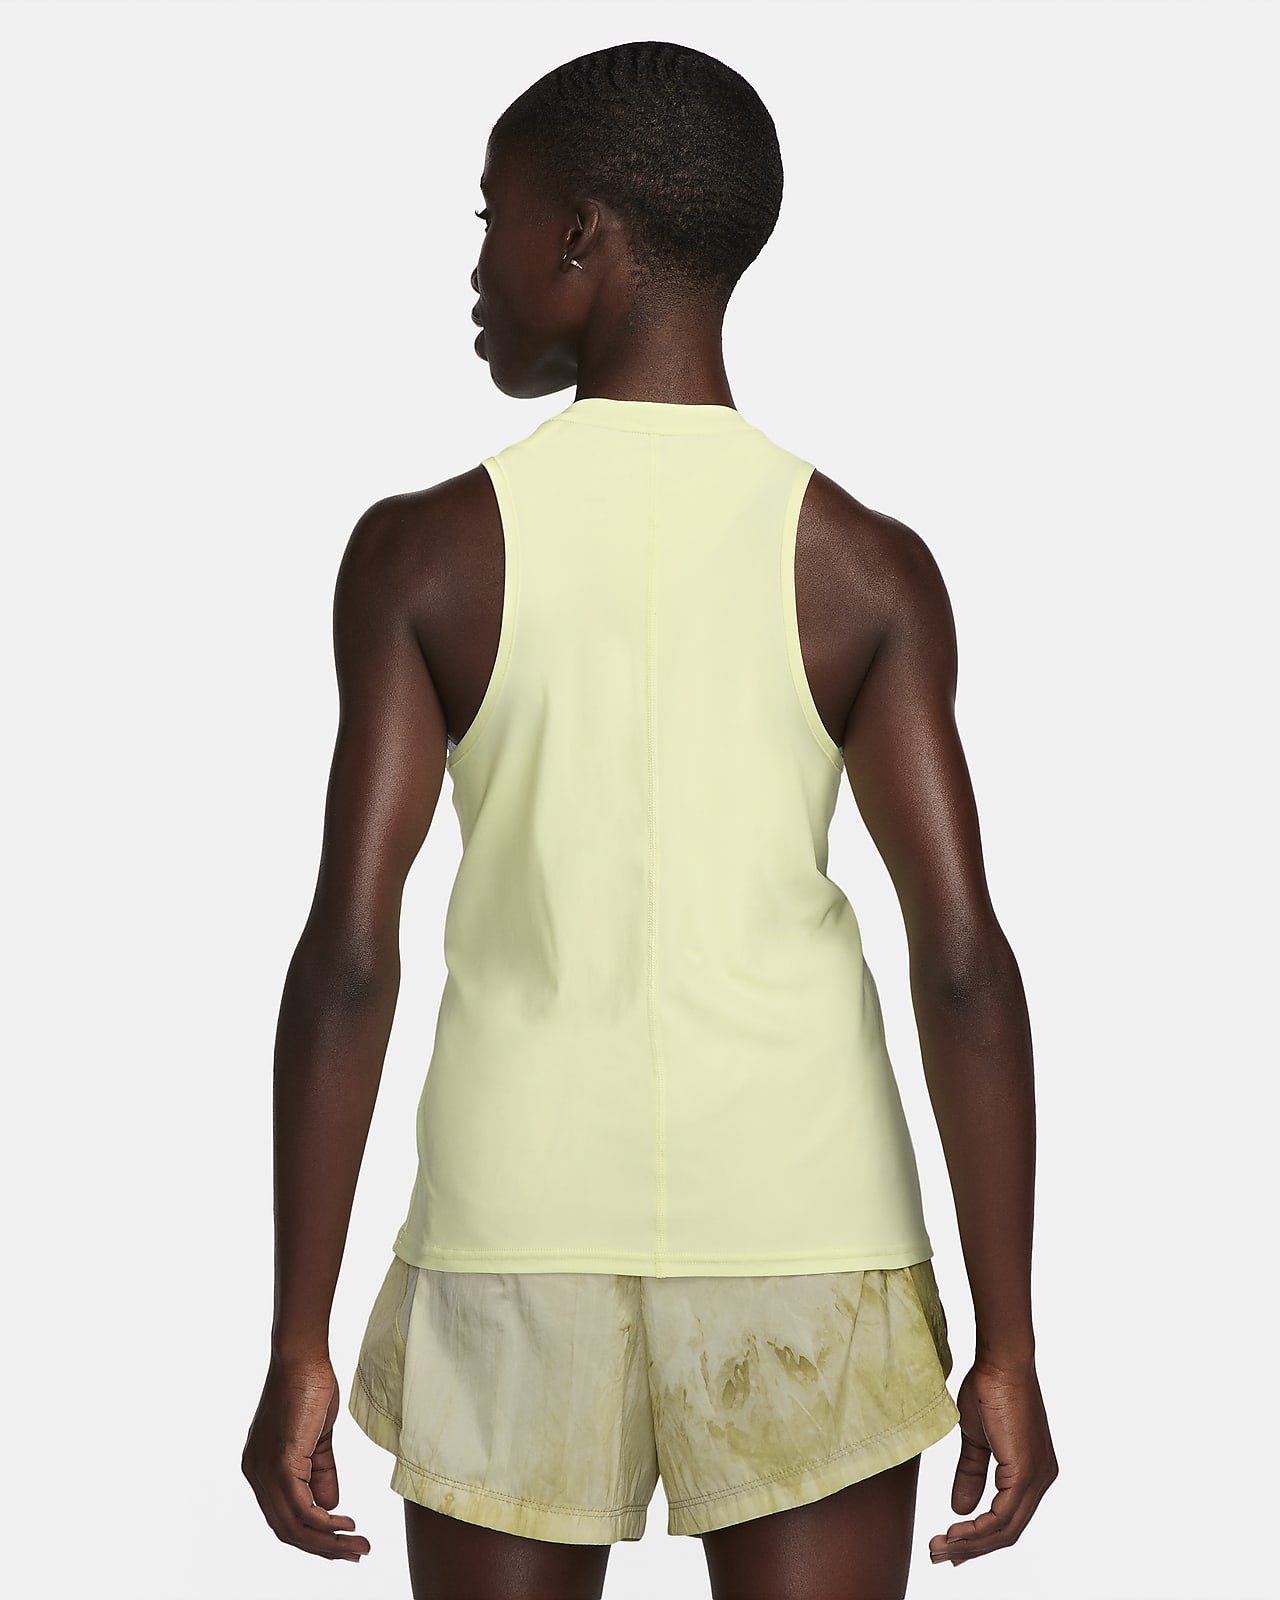 Nike T-Shirt Training Tank Top Black Running 921725-010 Women's US Size XS